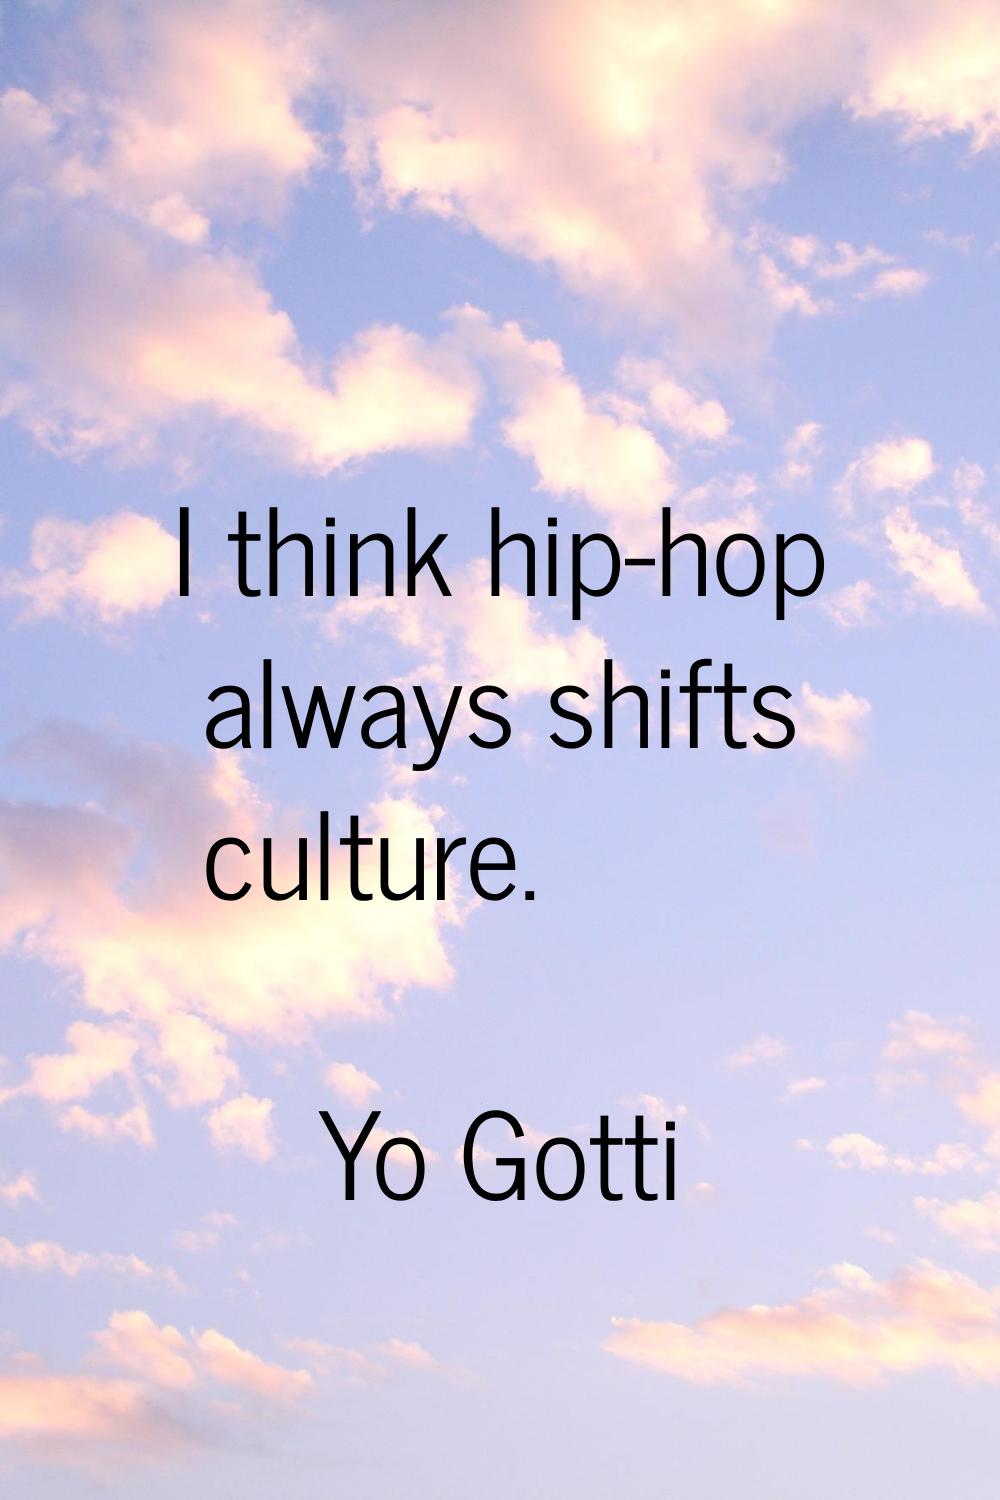 I think hip-hop always shifts culture.